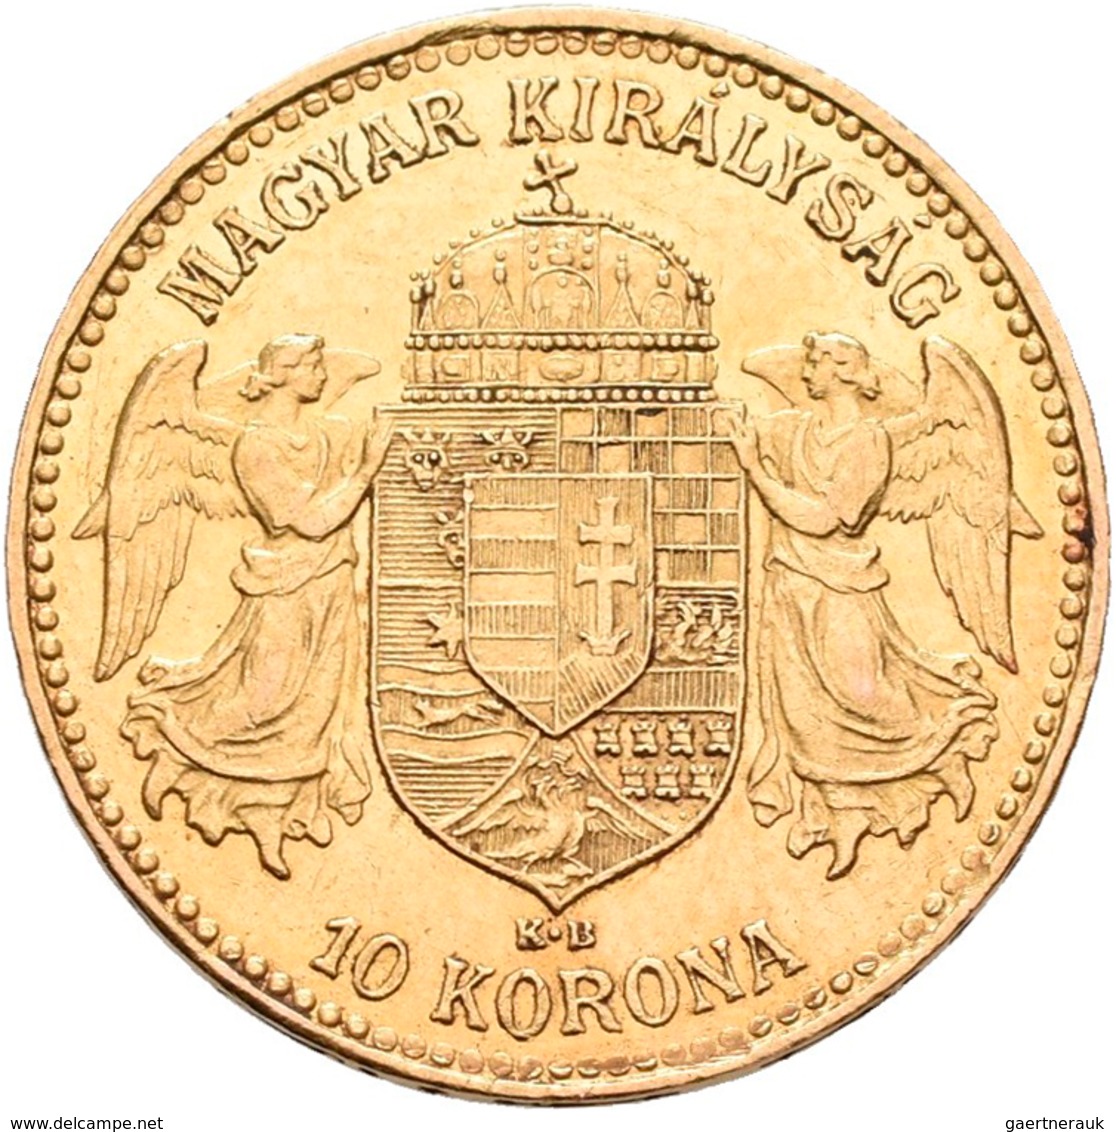 Ungarn - Anlagegold: Franz Joseph I. 1848-1916: 10 Kronen / Korona 1910, KM# 485, Friedberg 252. 3,3 - Hongrie